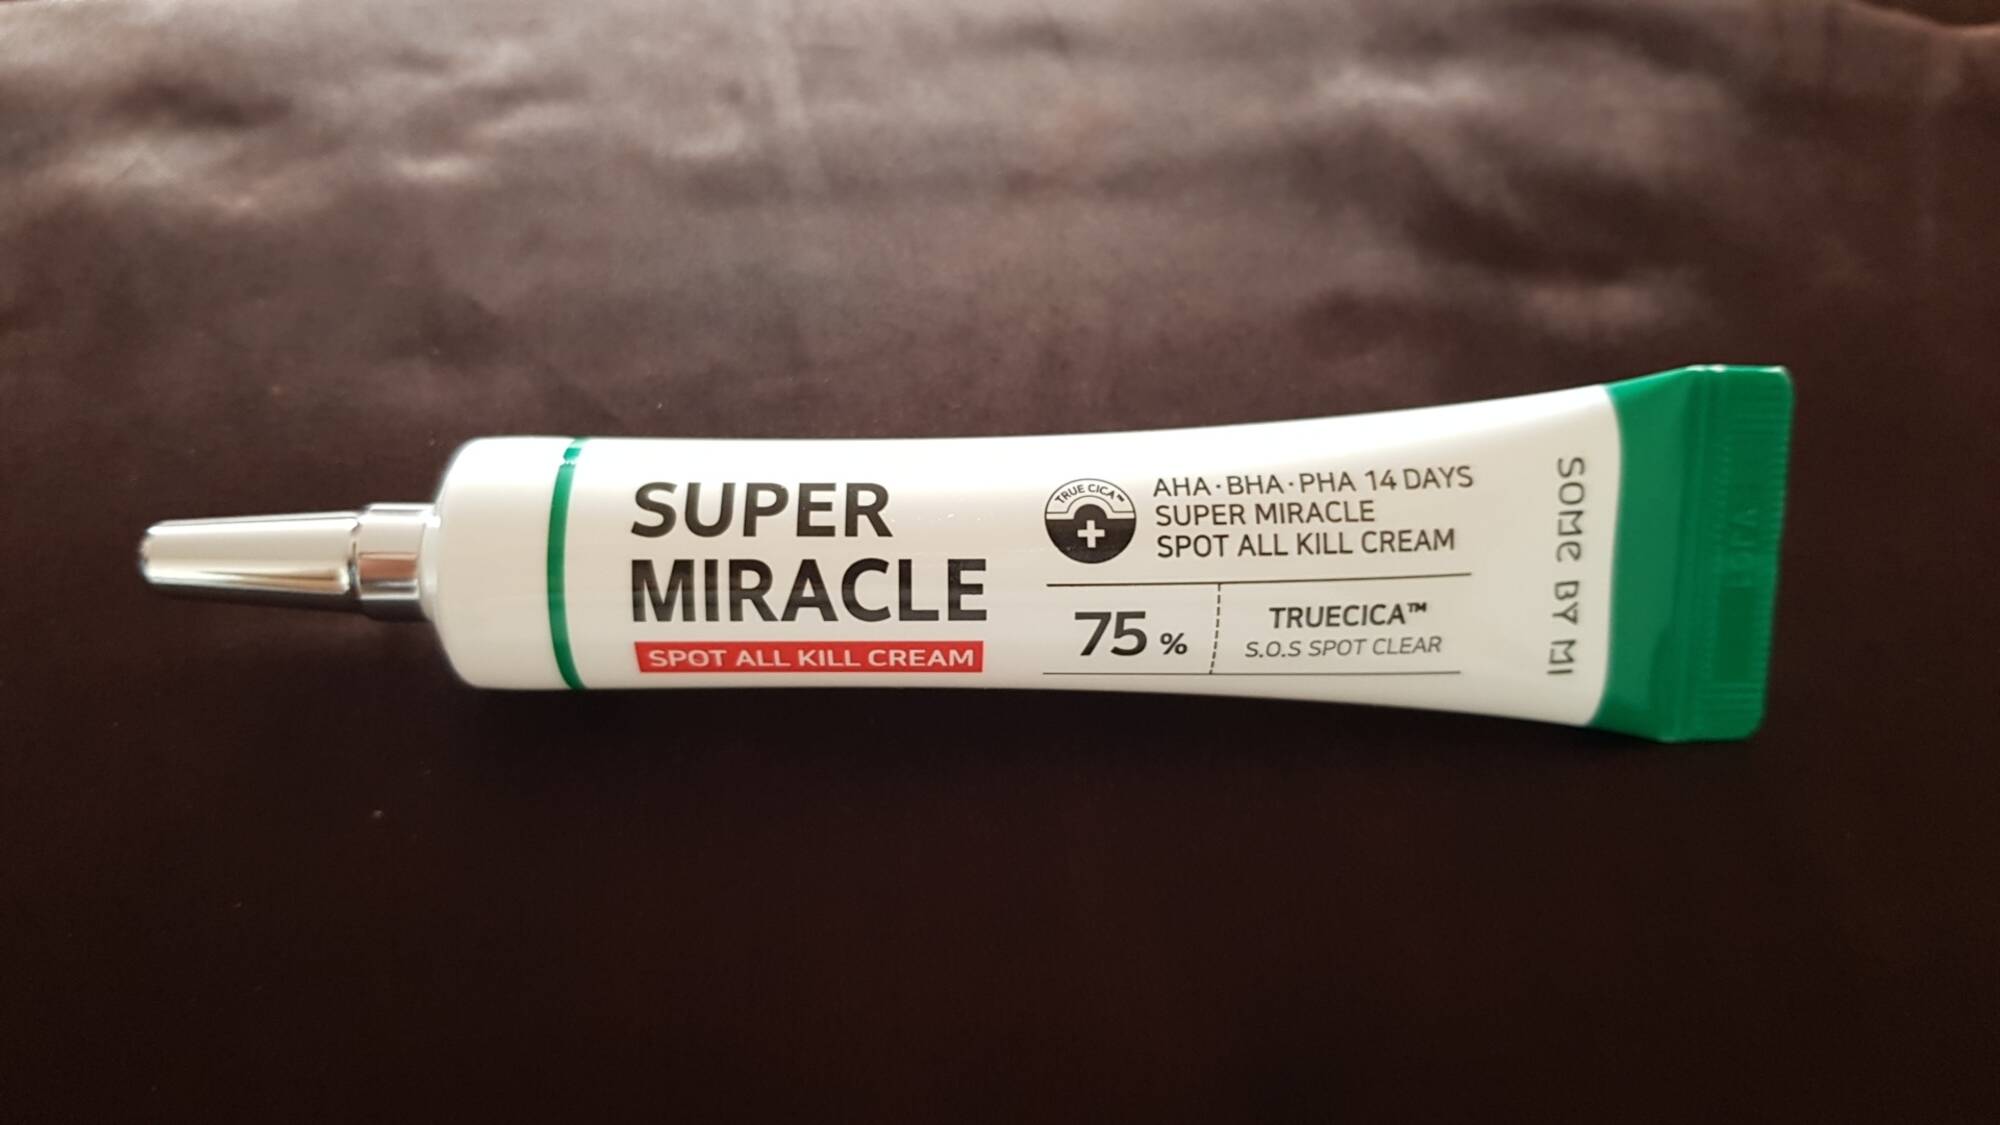 SOME BY MI - Super miracle - Spot all kill cream